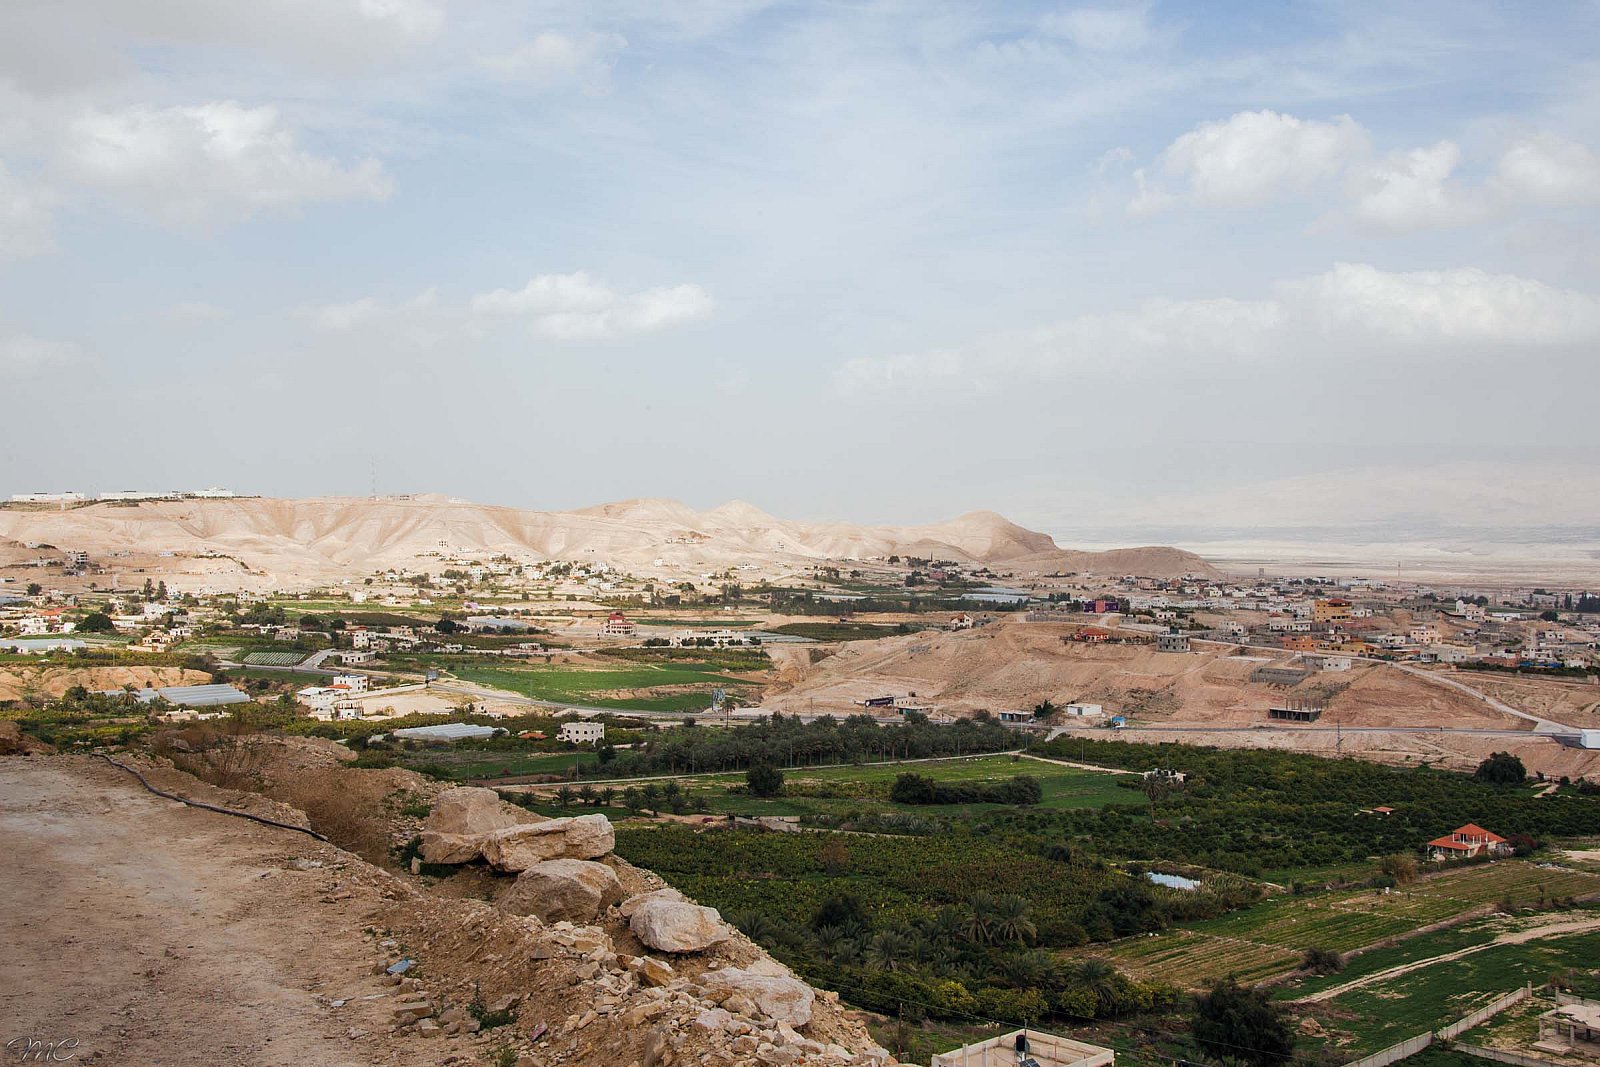 западный берег реки иордан